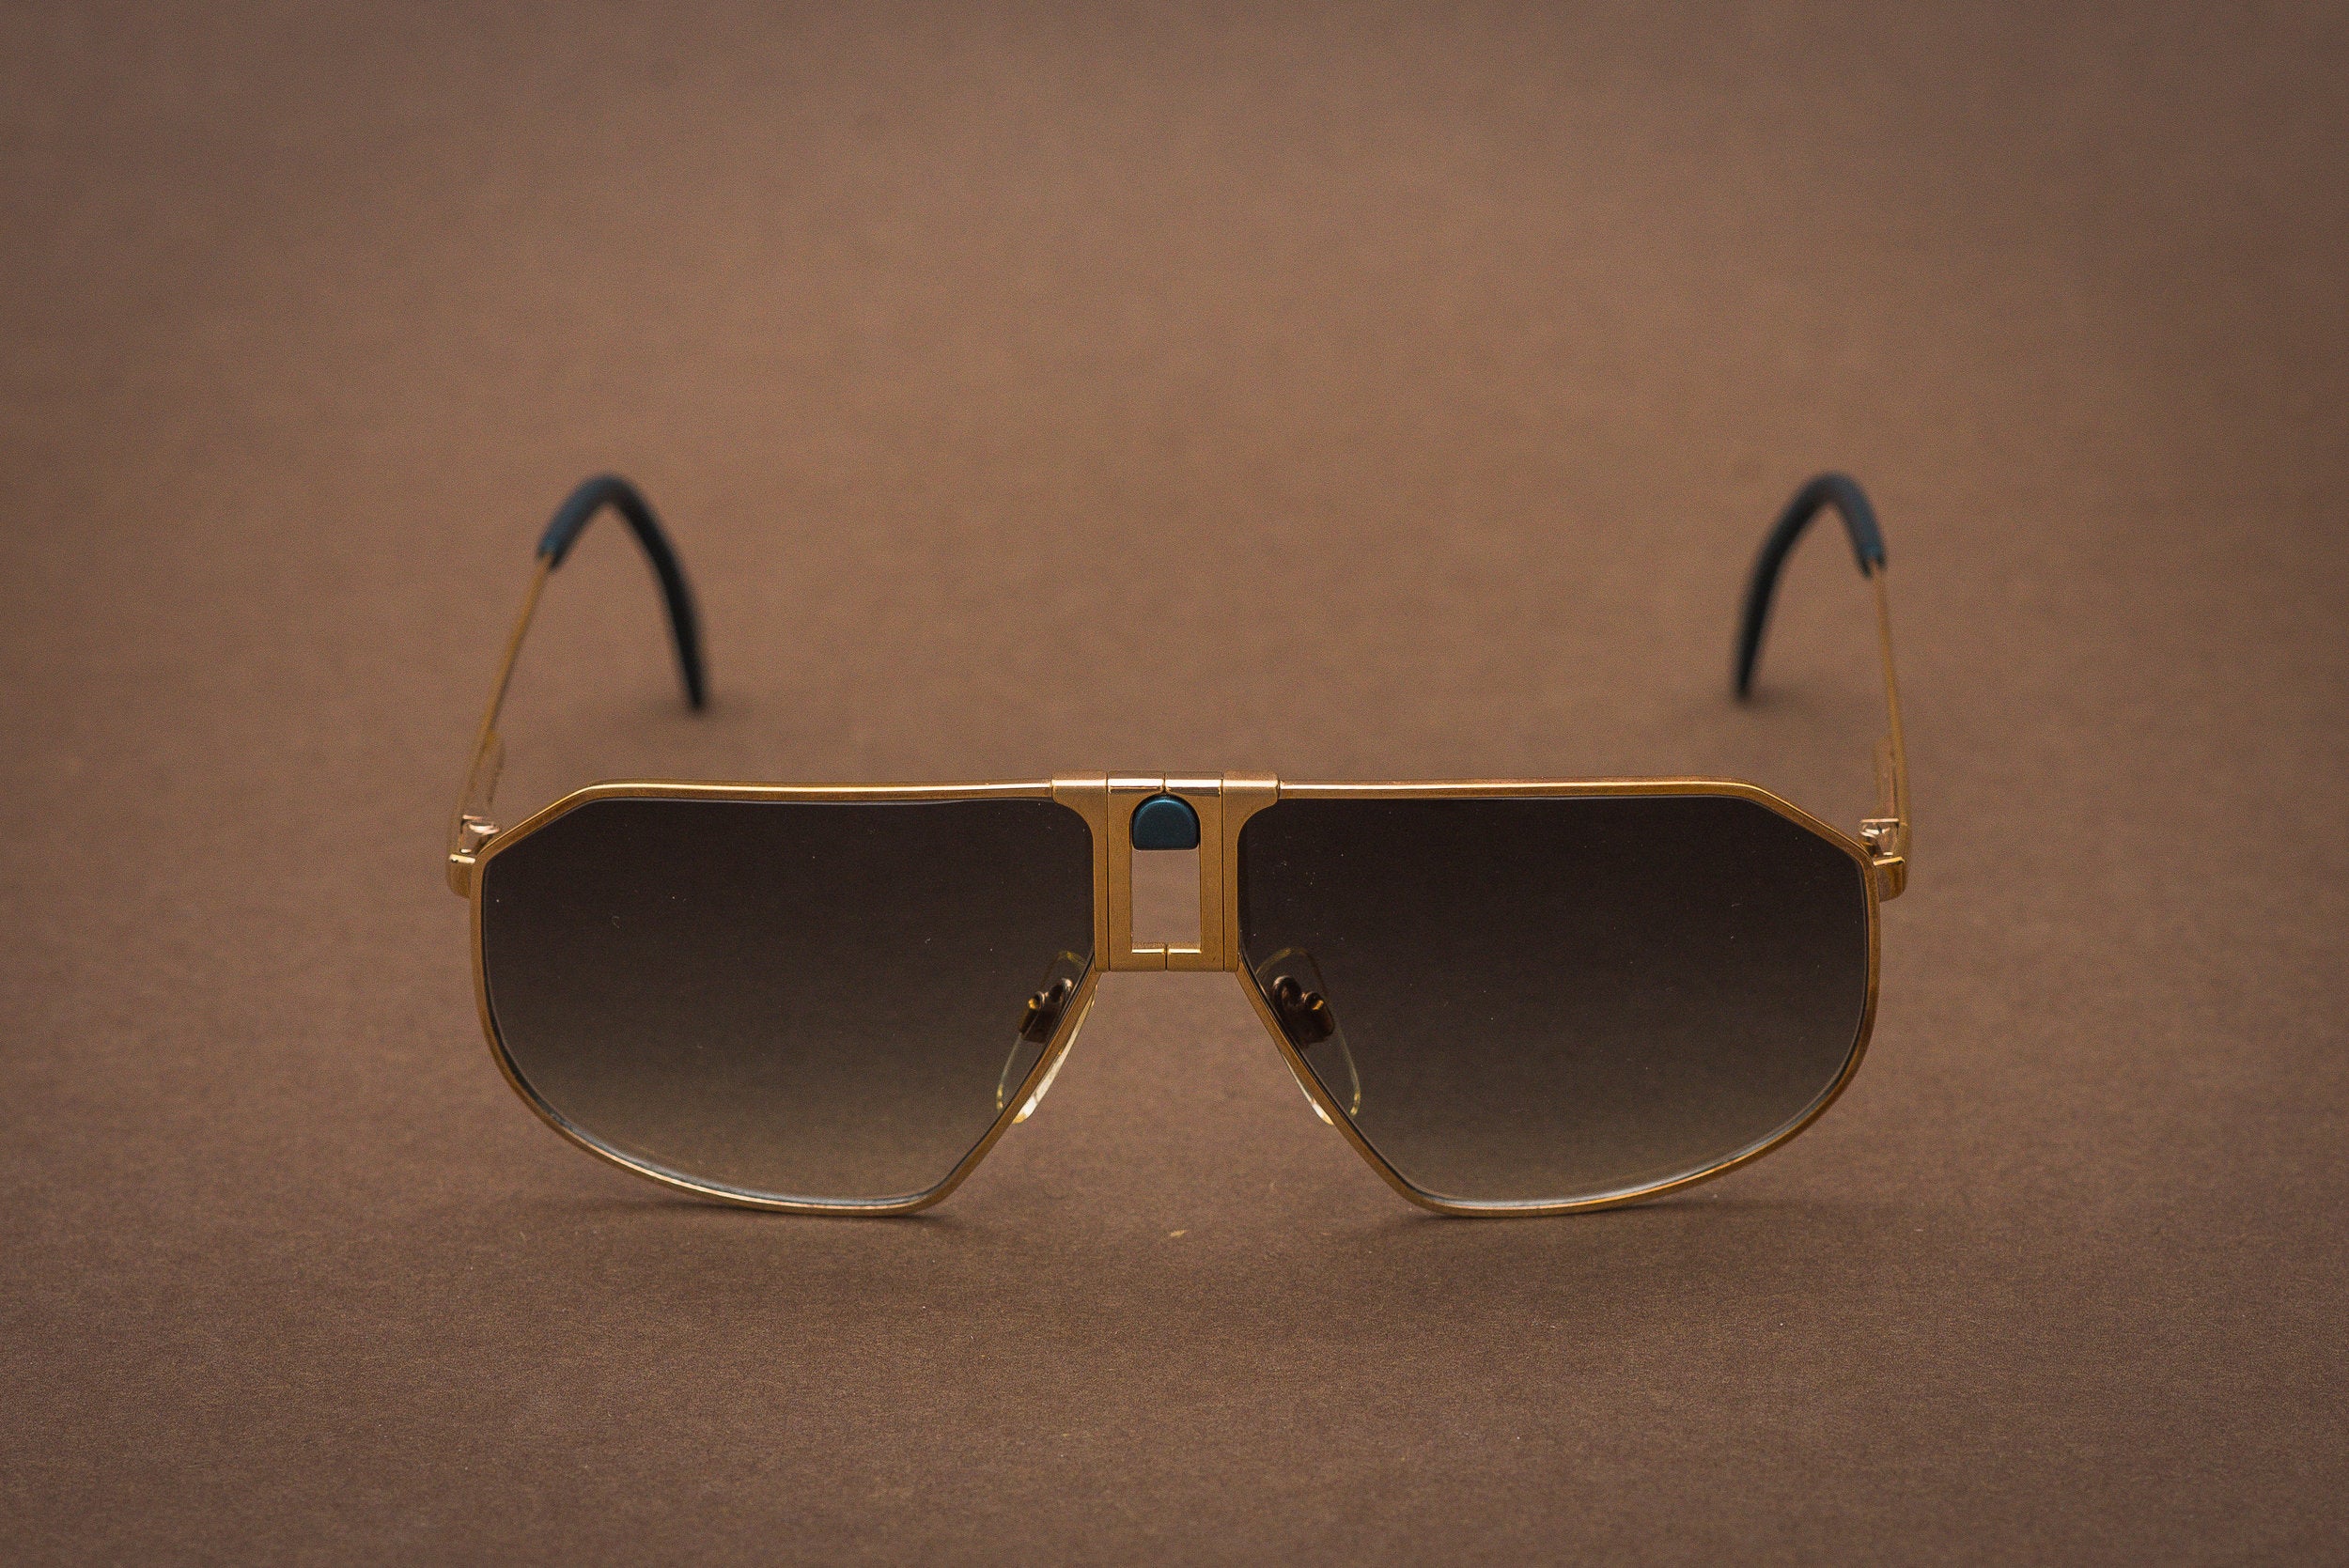 Longines 0153 by Metzler sunglasses